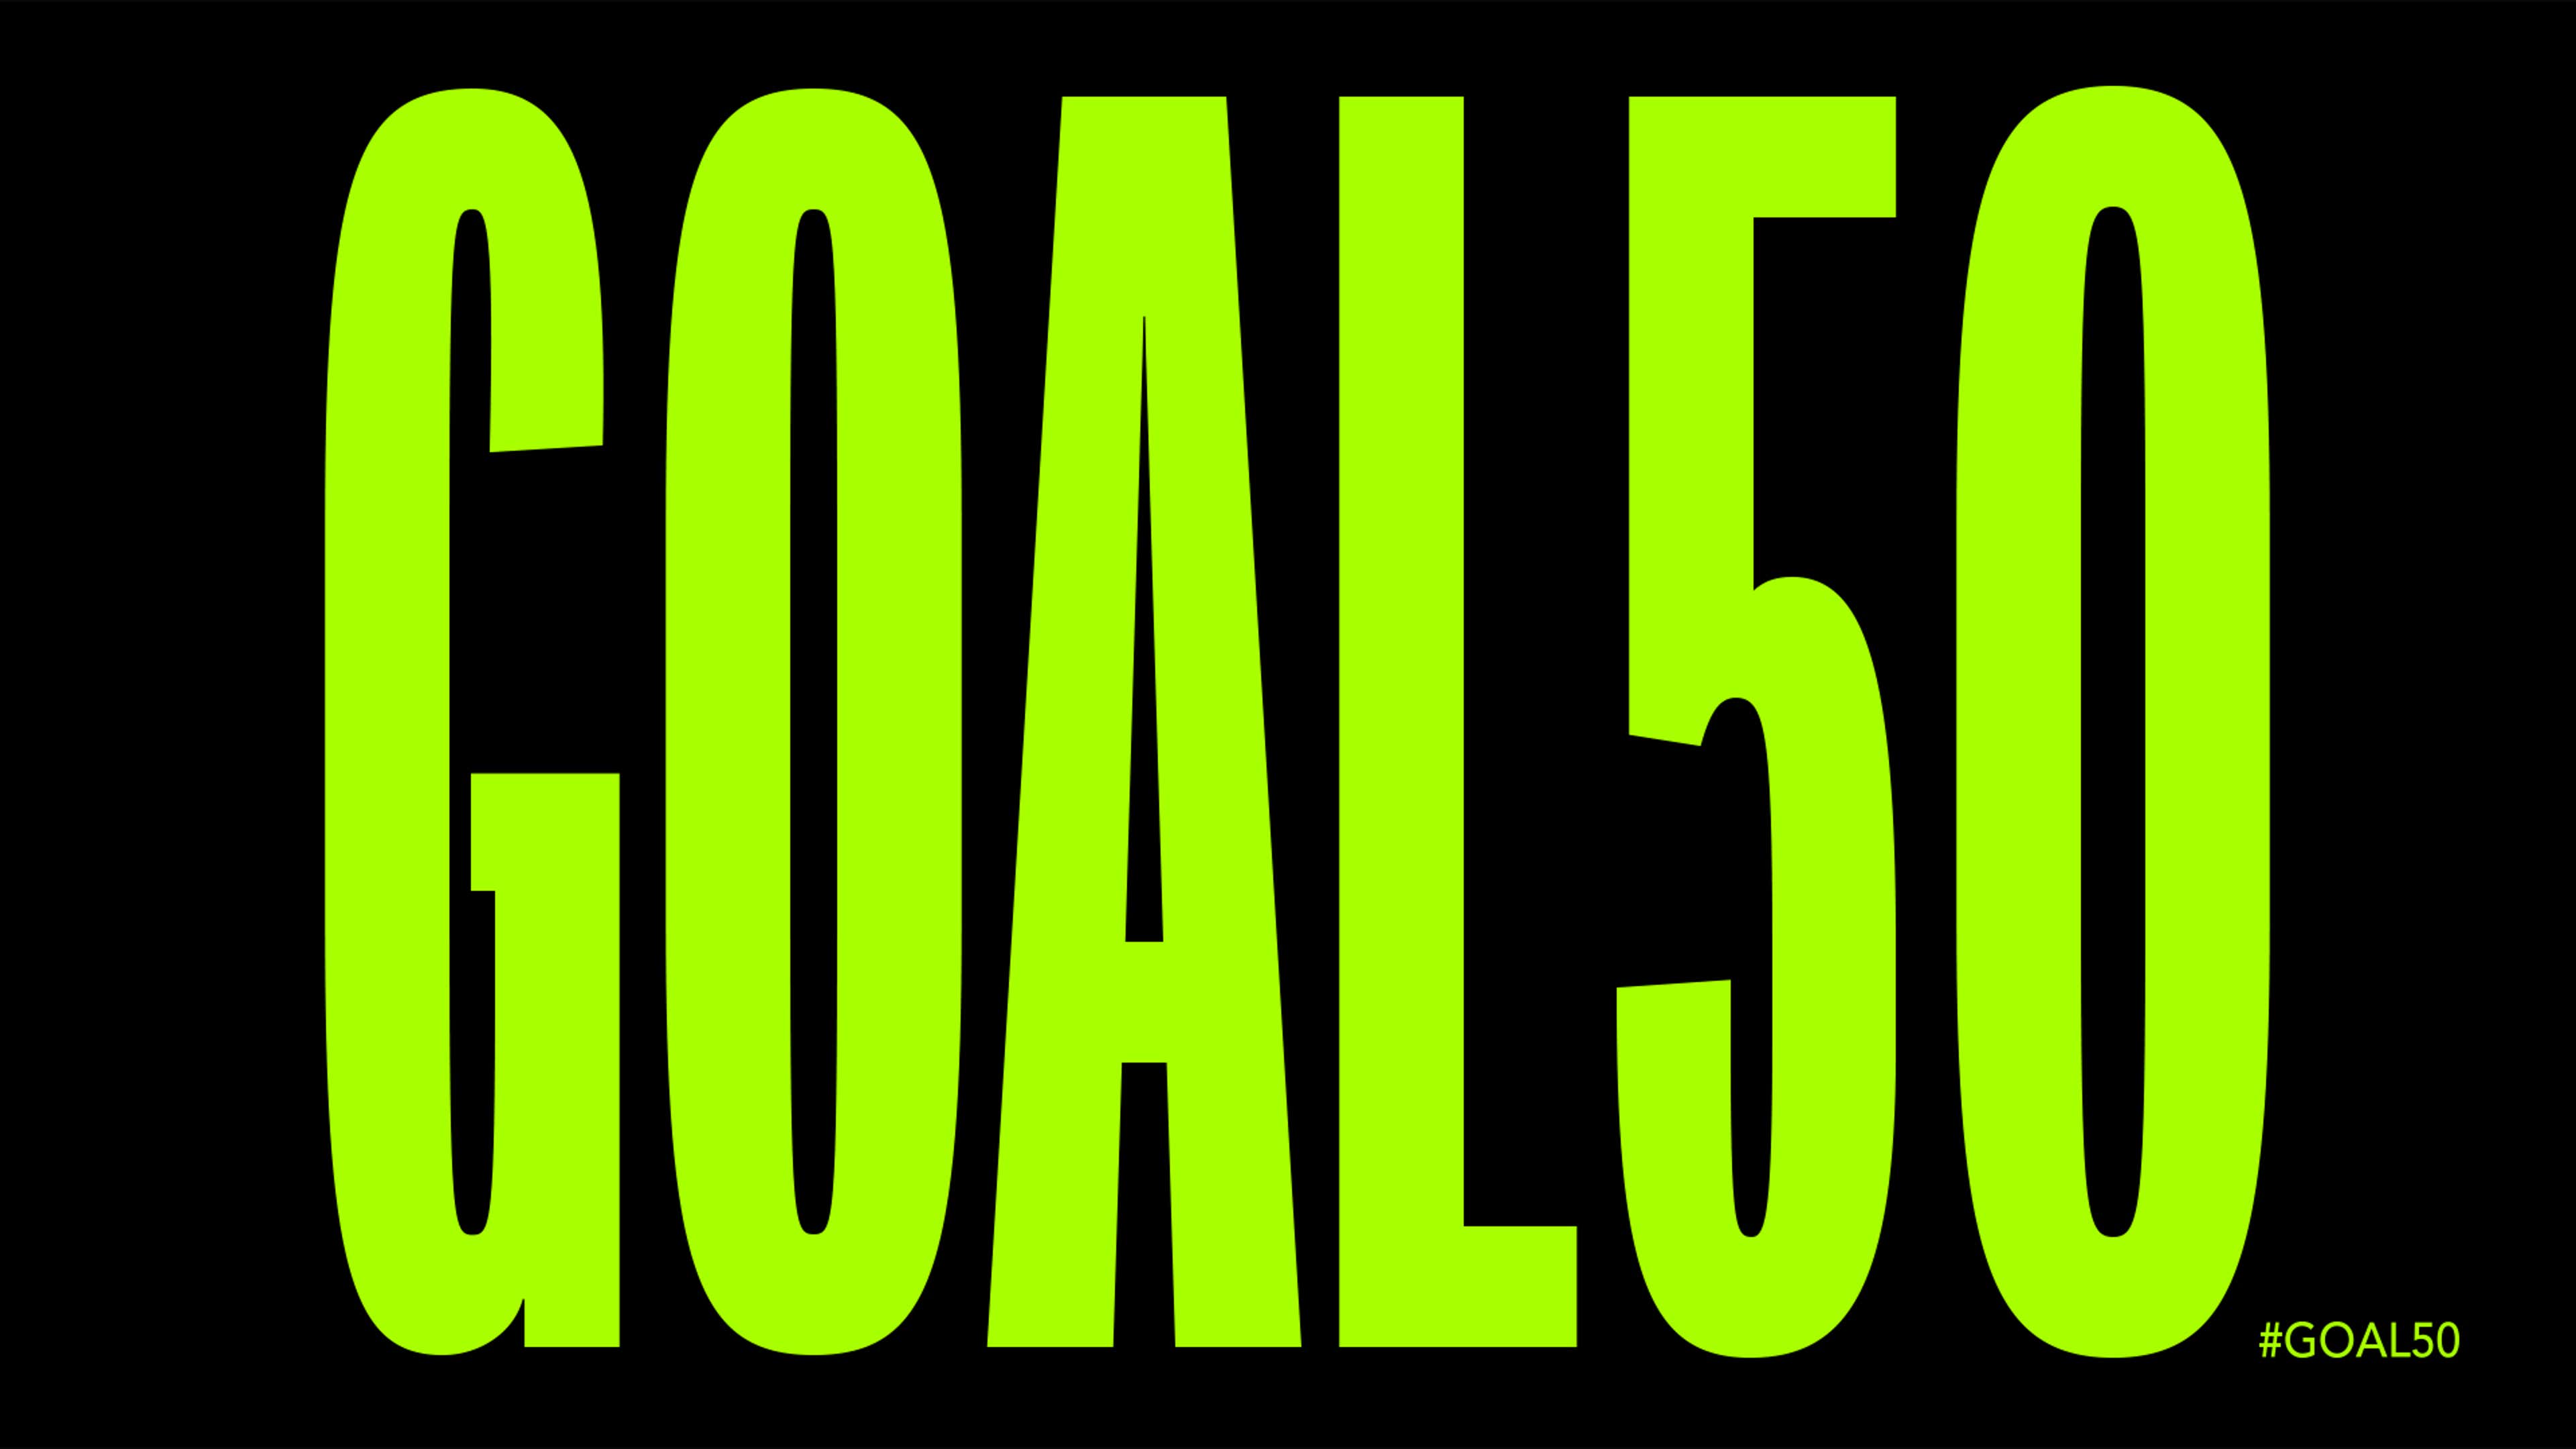 Goal 50